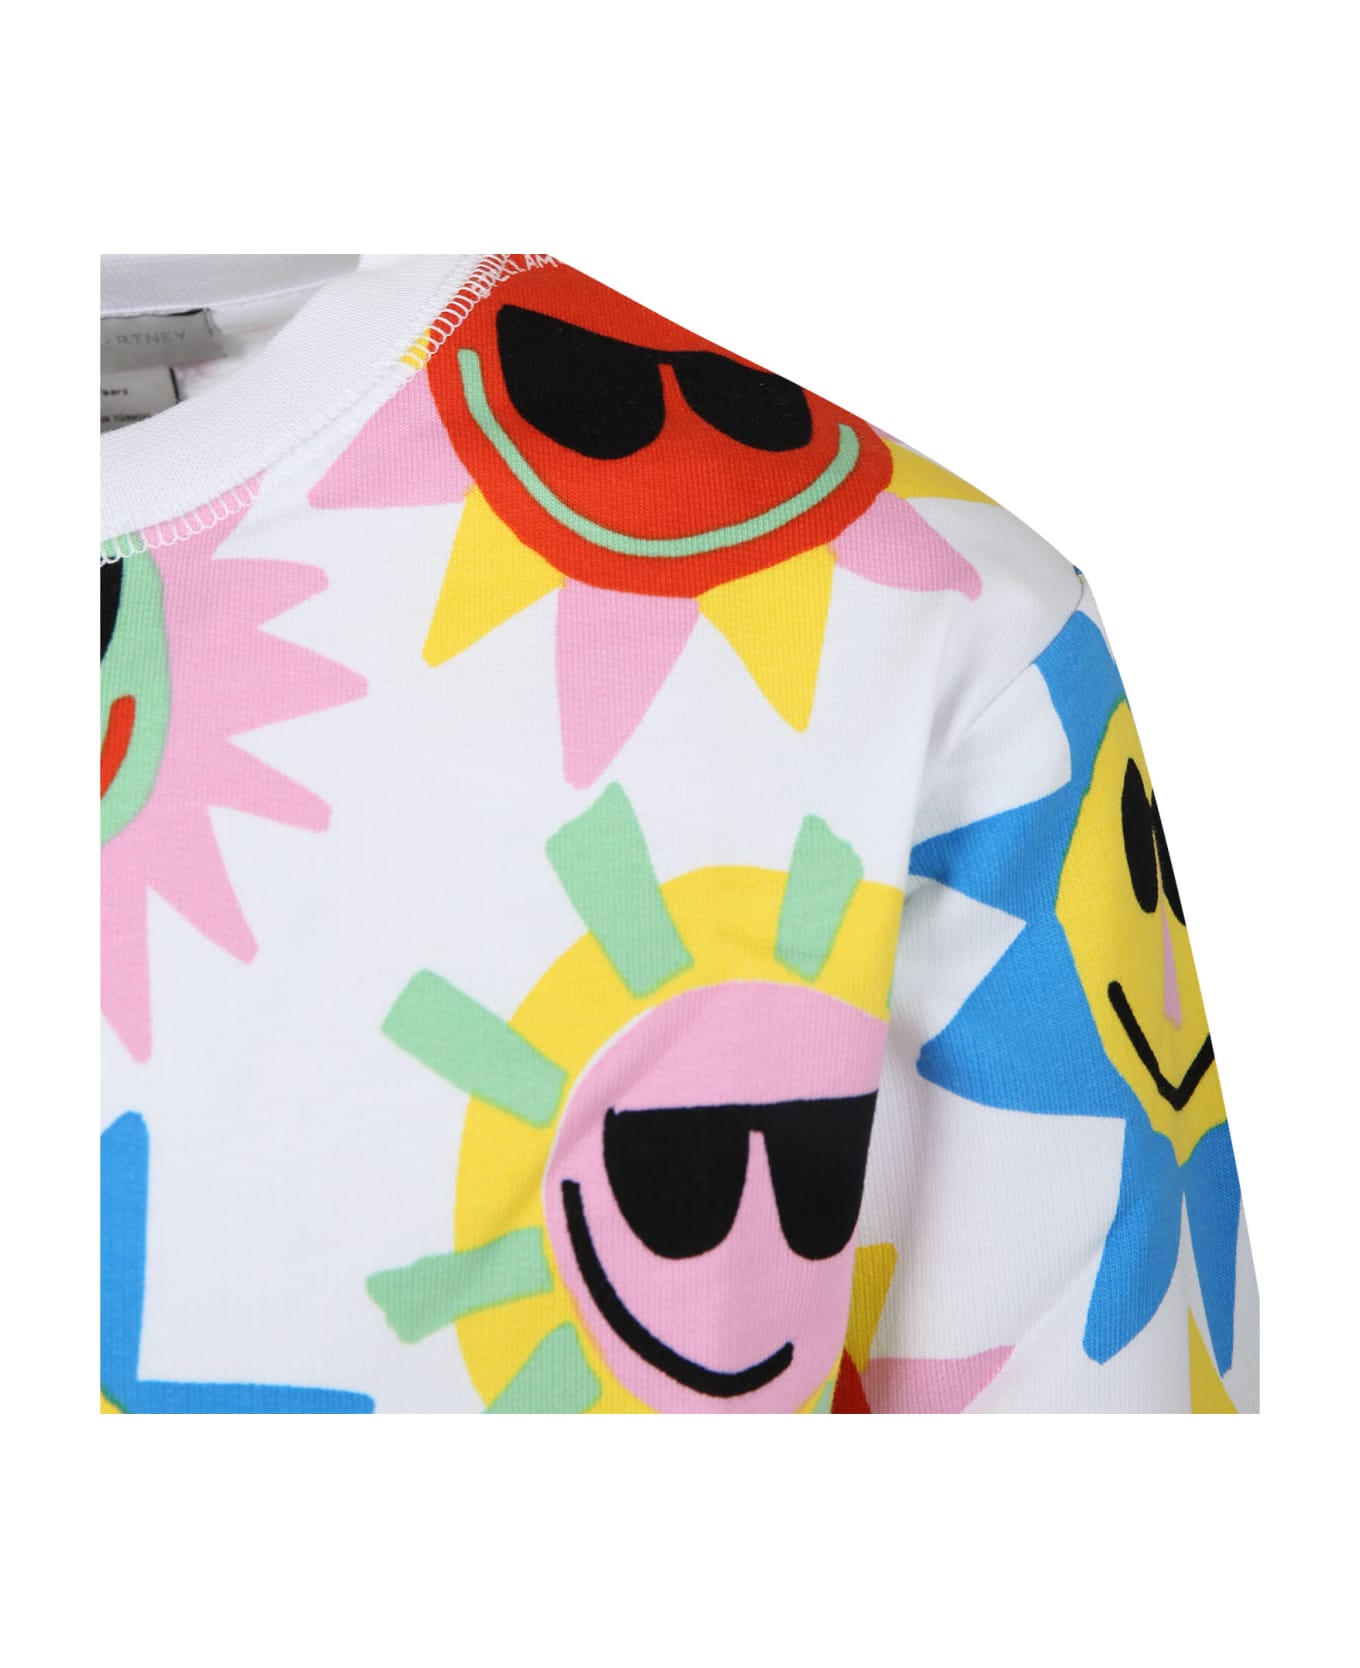 Stella McCartney Kids White Sweatshirt For Girl With Multicolor Sun Print - White